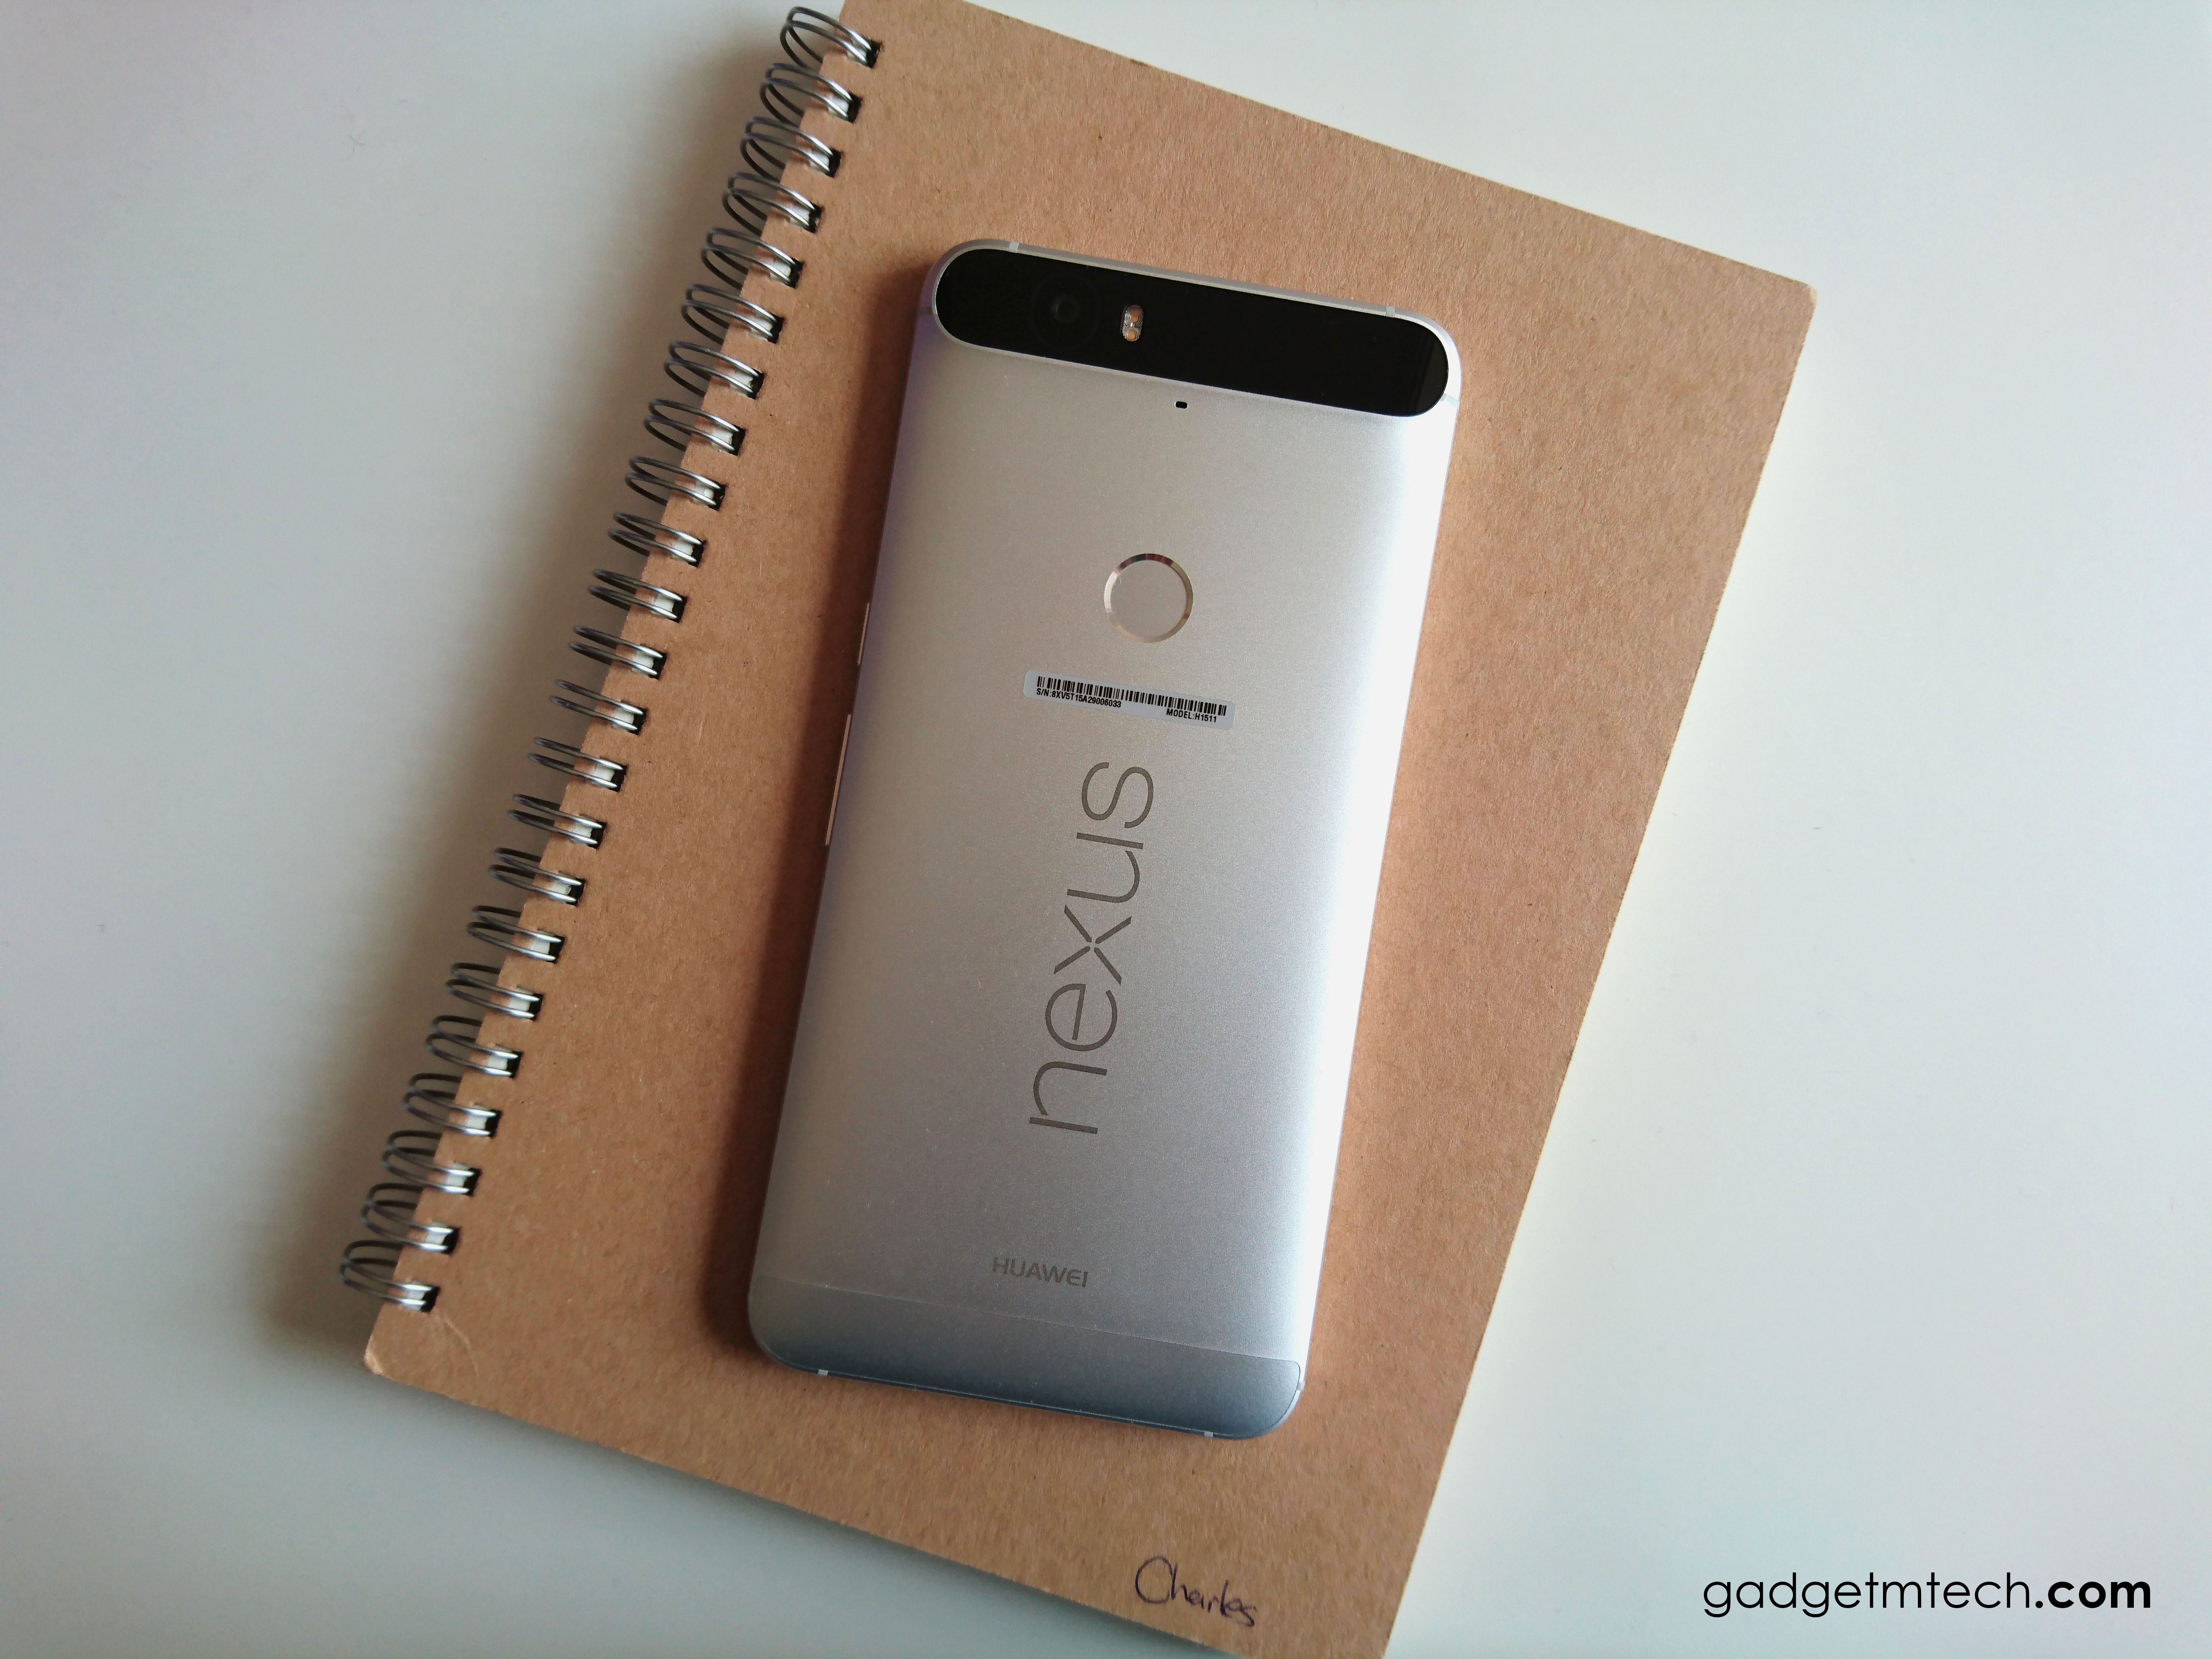 Google Nexus 6P by Huawei Review: Meet the Best